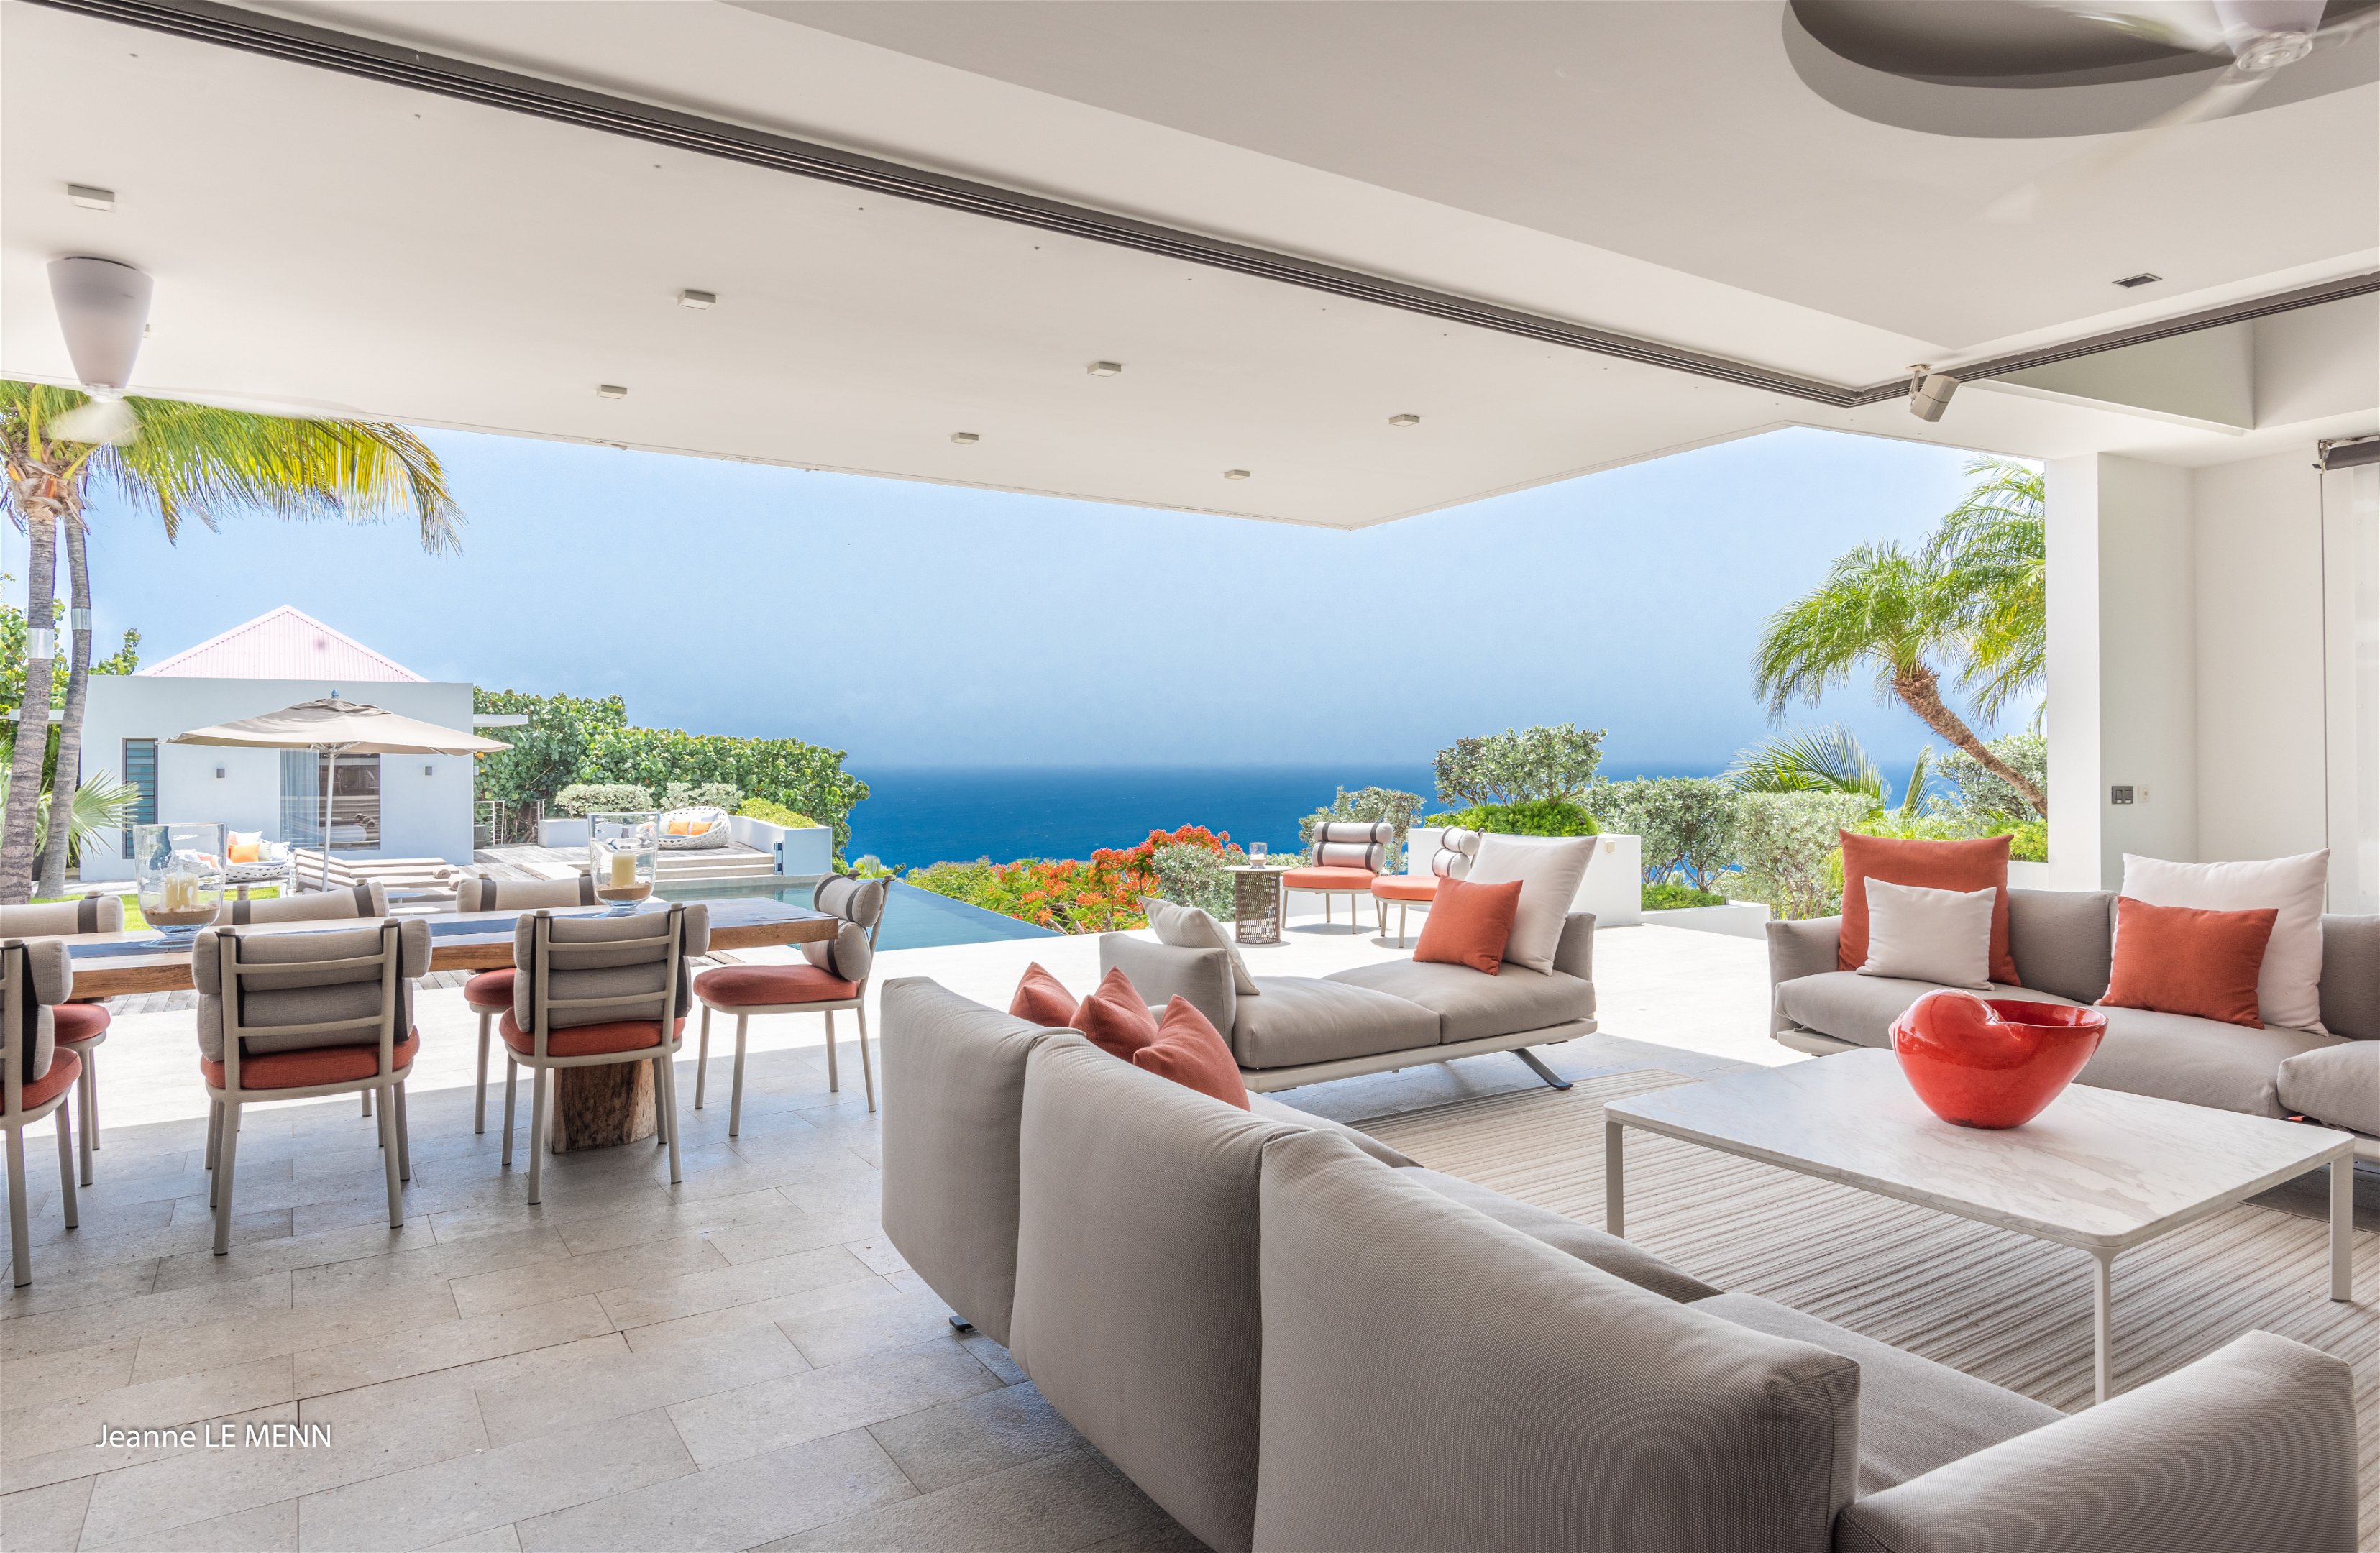 Ceiling fan, HD-TV, Dish network, DVD player, Apple TV. Opens onto the terrace. Ocean view. 